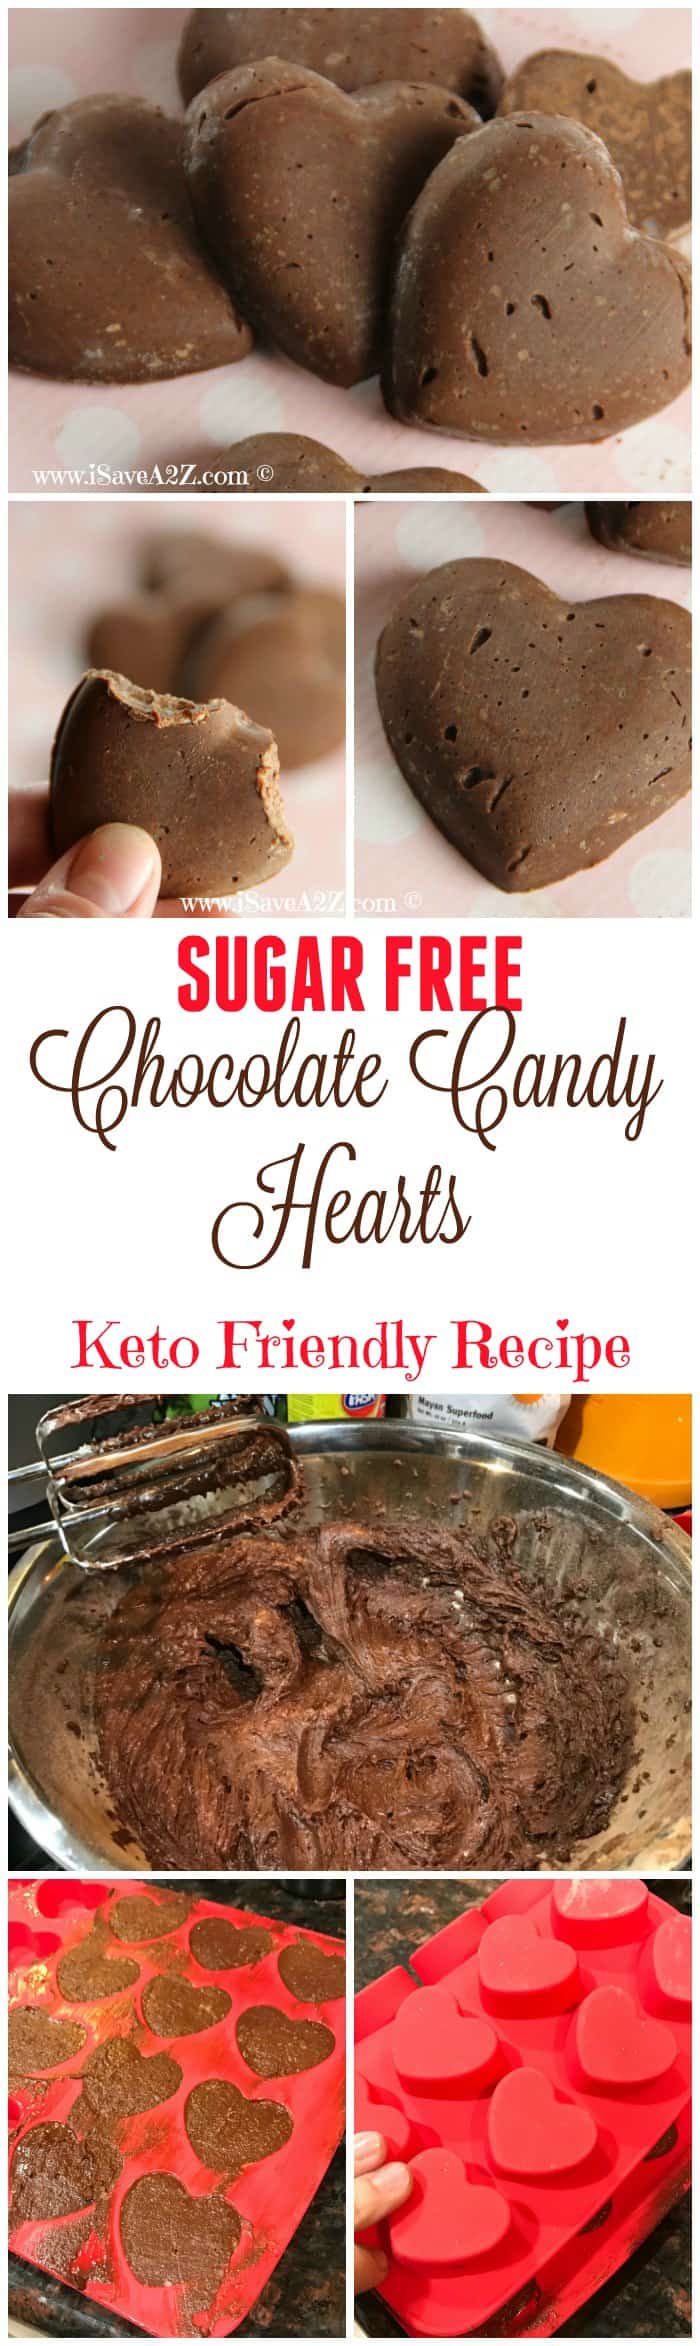 Sugar Free Chocolate Candy Hearts Recipe